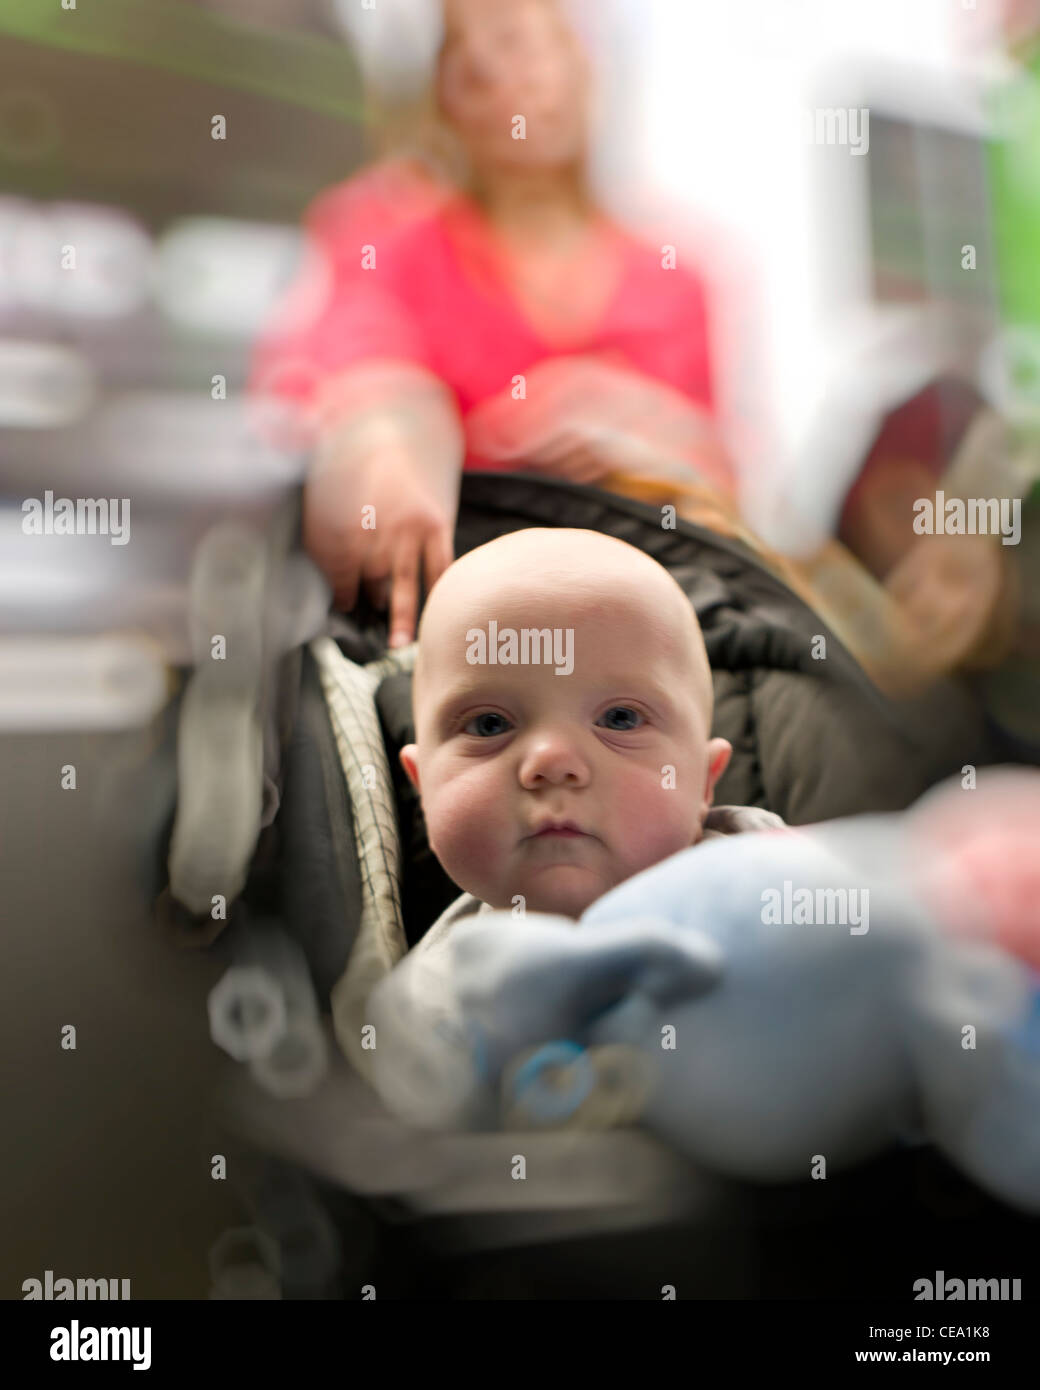 Baby boy in stroller Stock Photo